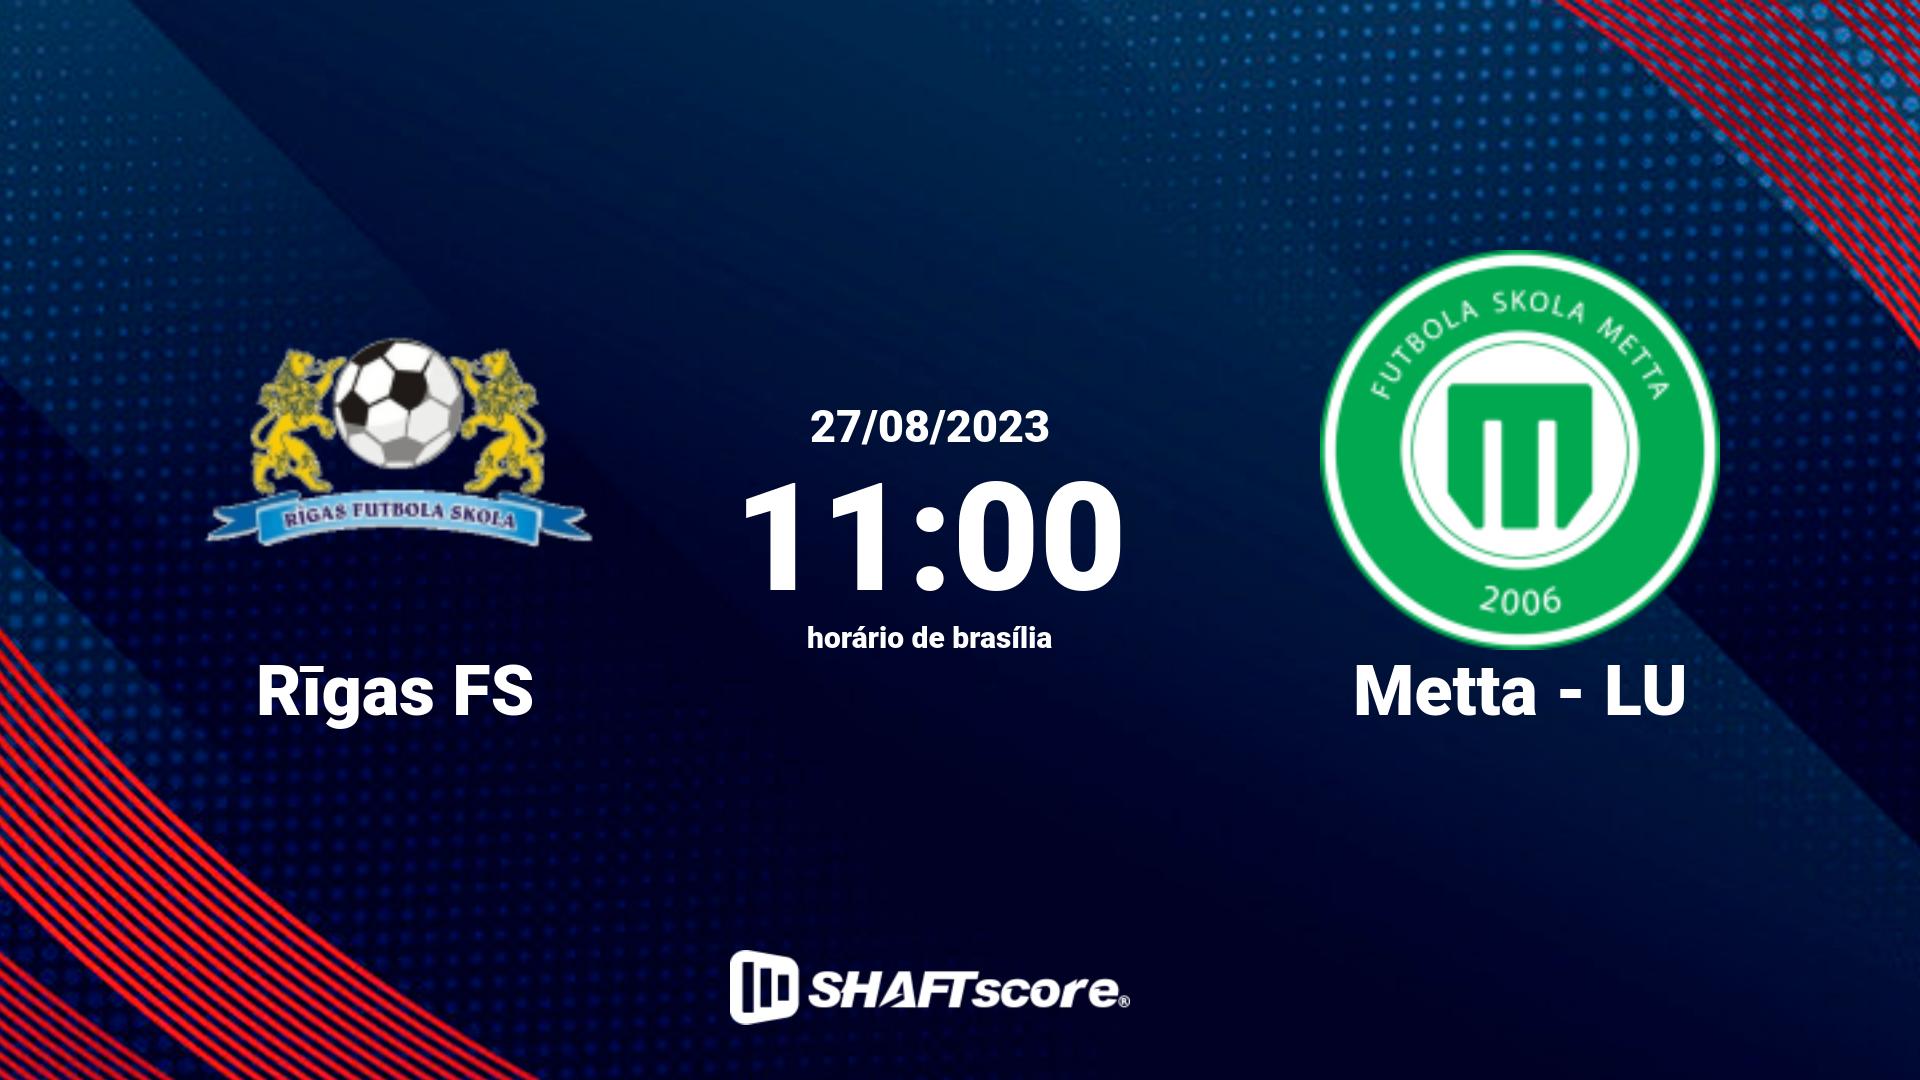 Estatísticas do jogo Rīgas FS vs Metta - LU 27.08 11:00